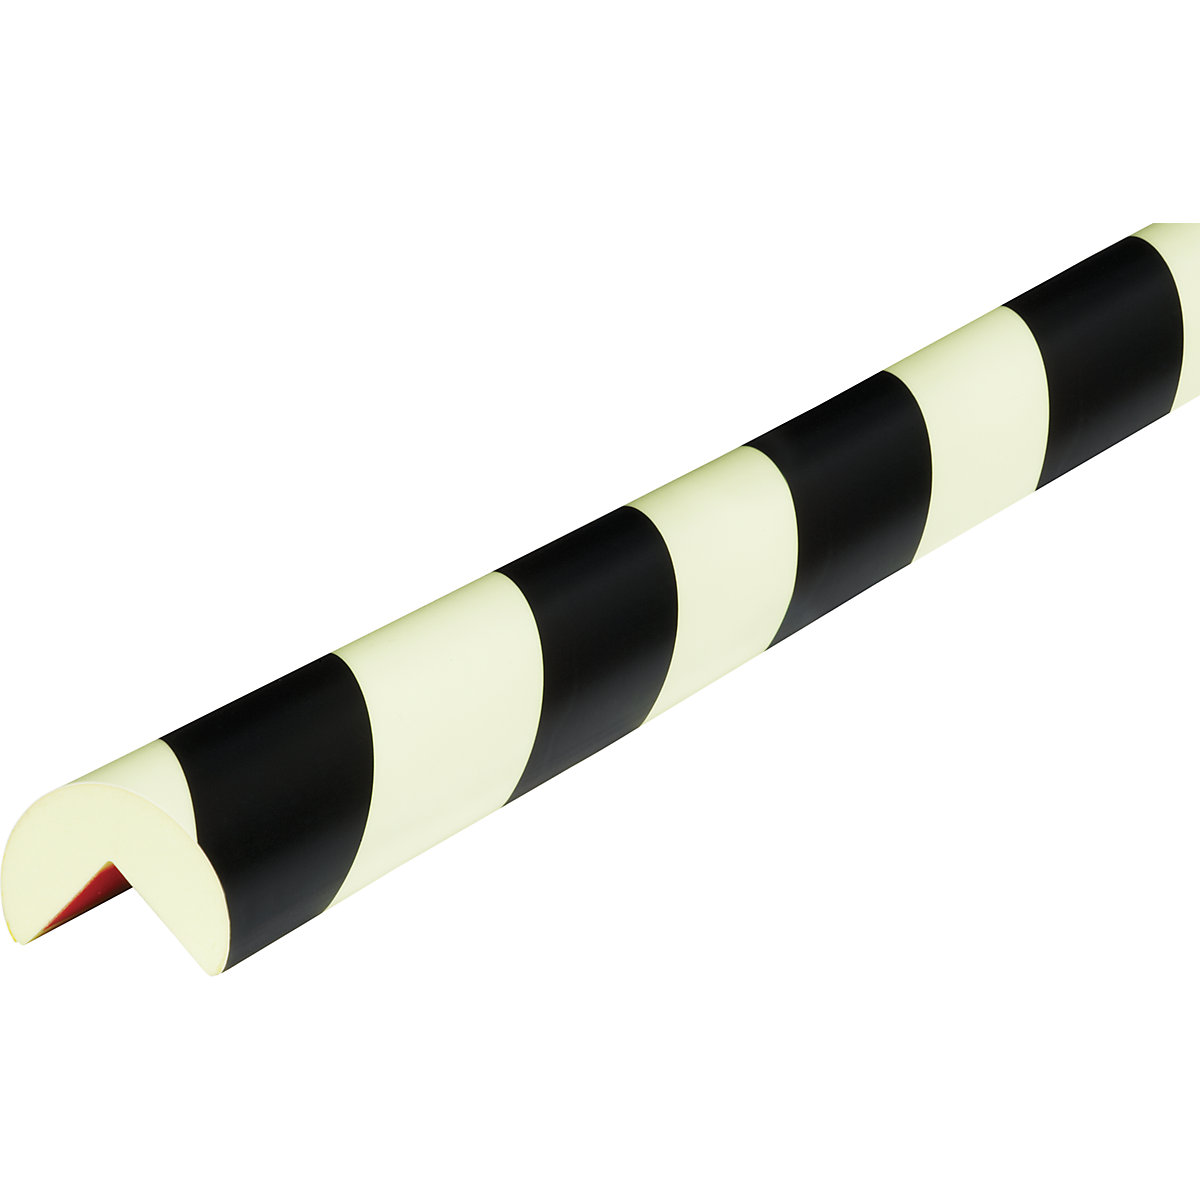 Knuffi® corner protection – SHG, type A, 1 m piece, black / long-lasting fluorescent-23